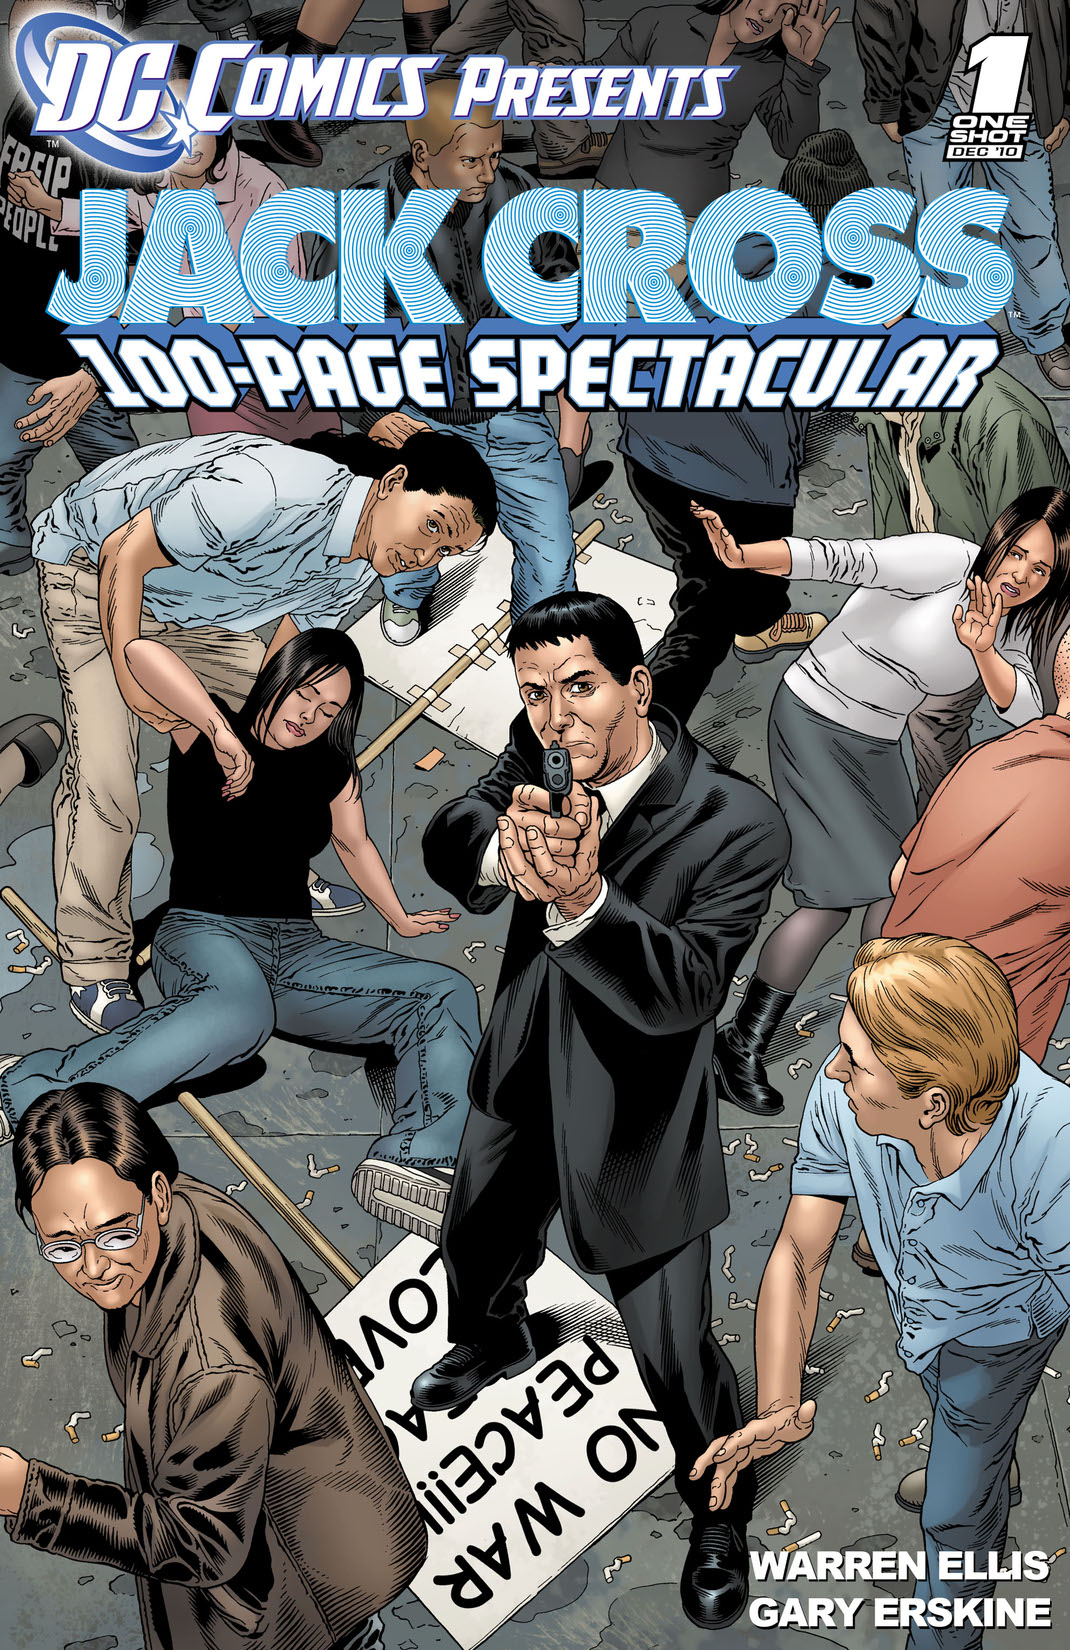 DC Comics Presents: Jack Cross (2010-) #1 preview images